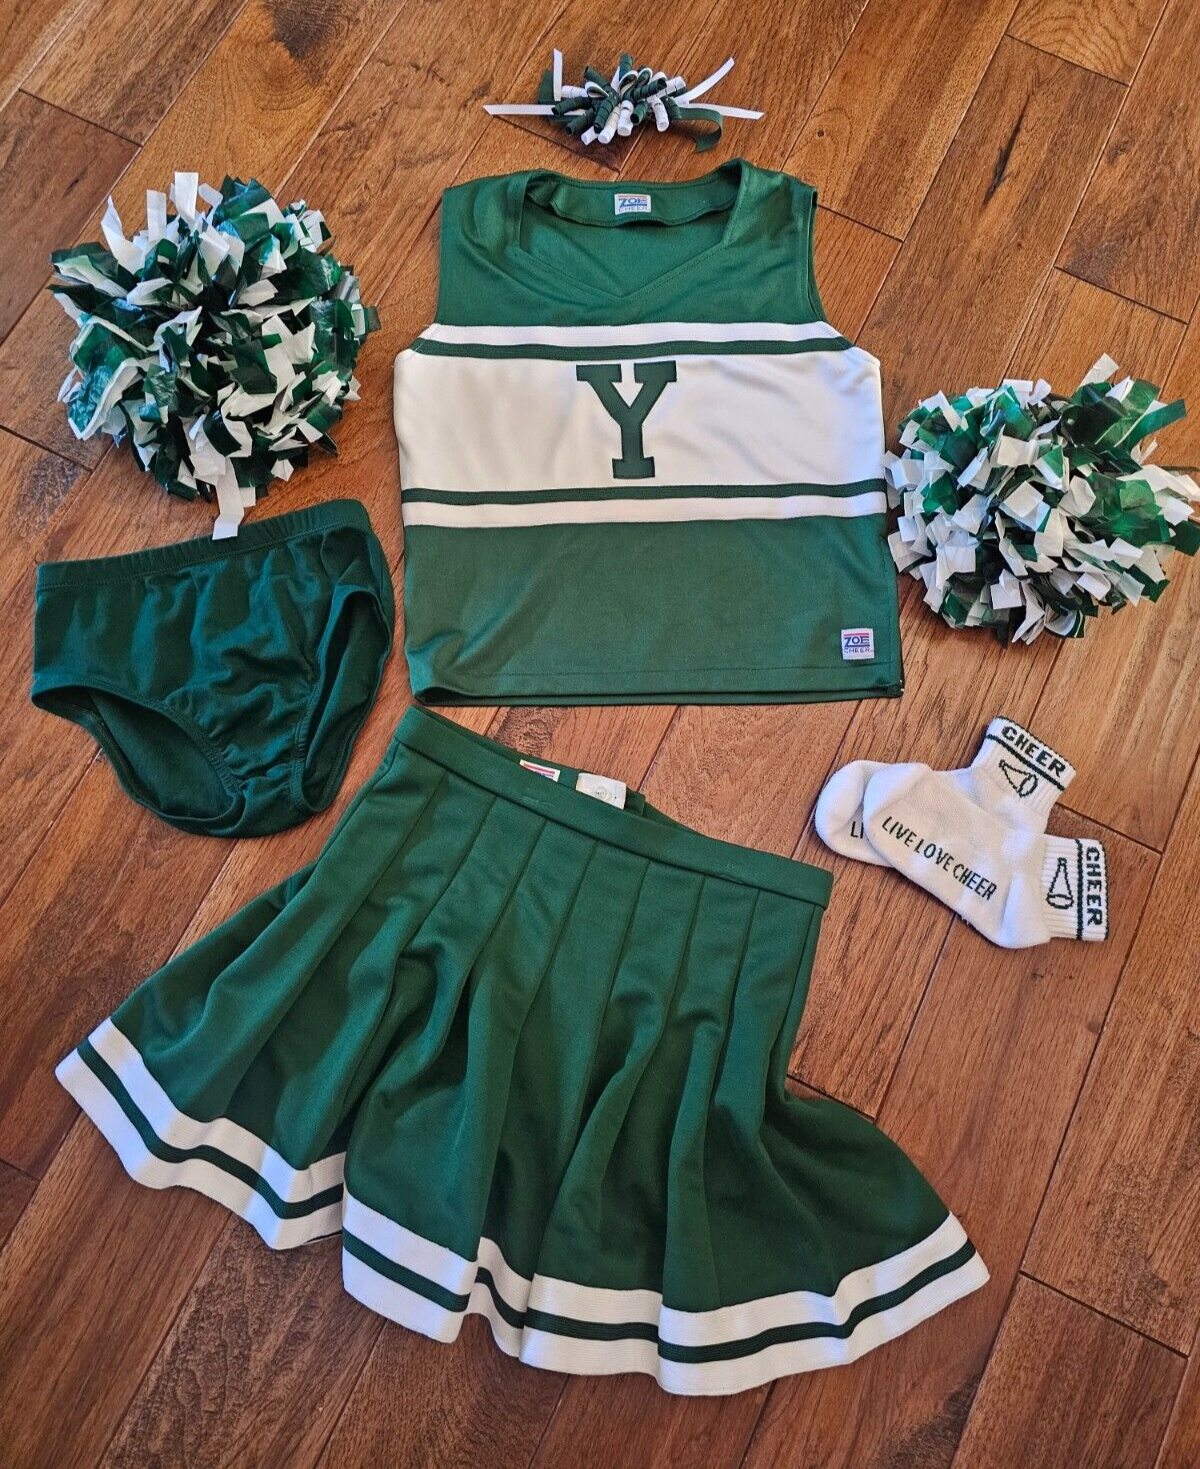 Primary image for Junior Small Cheerleading Uniform/Costume Pom Poms, Socks, Hair Bow Green/White